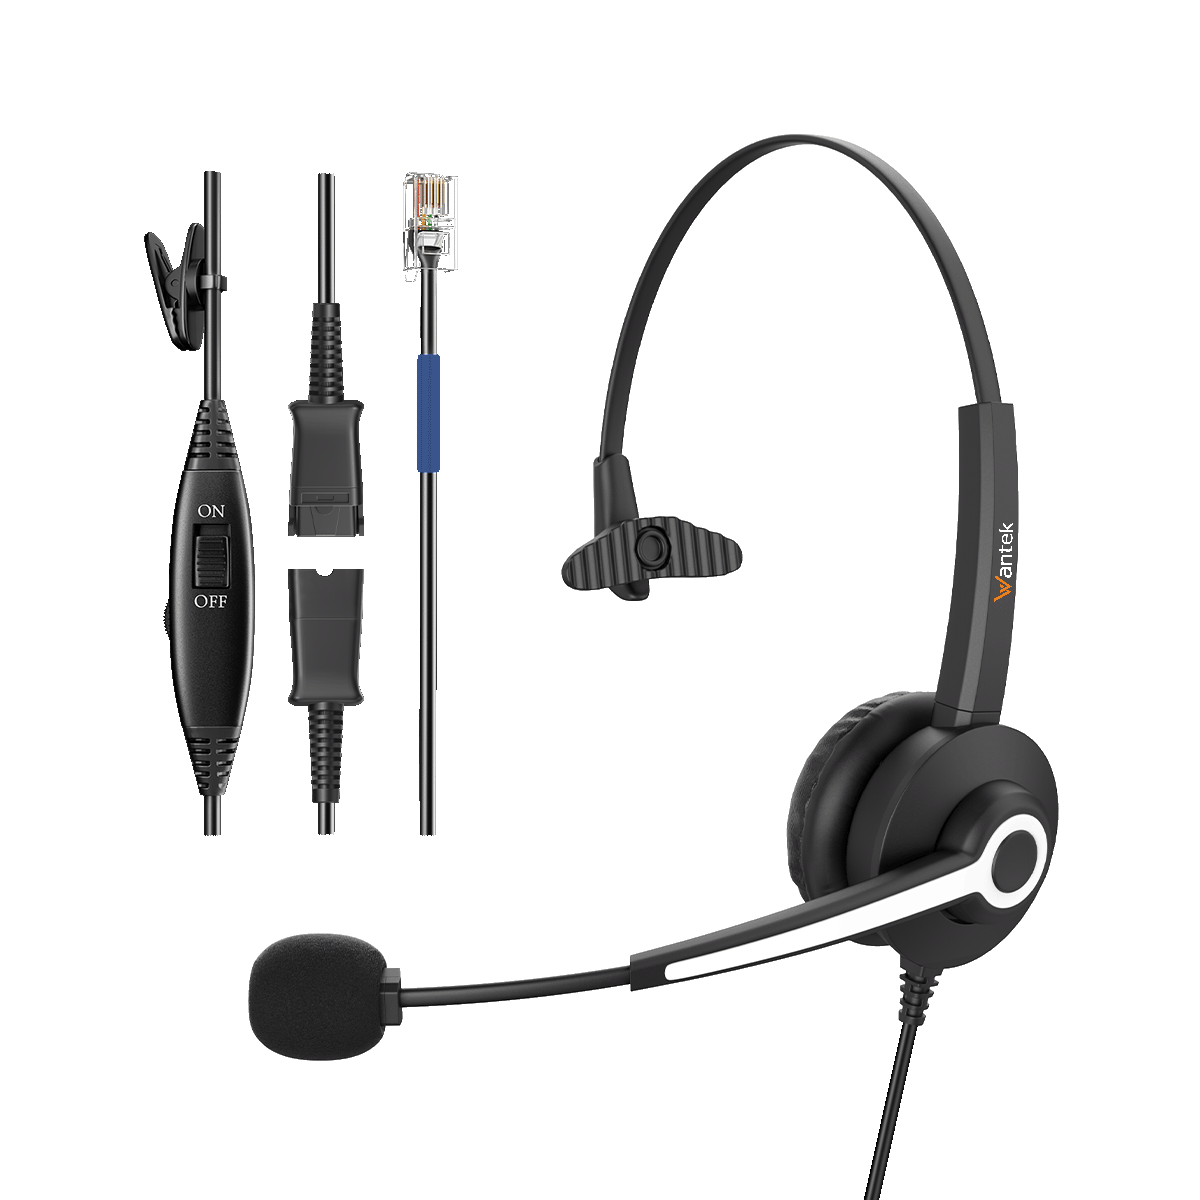 Wantek® h681 mono RJ9【RJ2】 headset with QD for calling